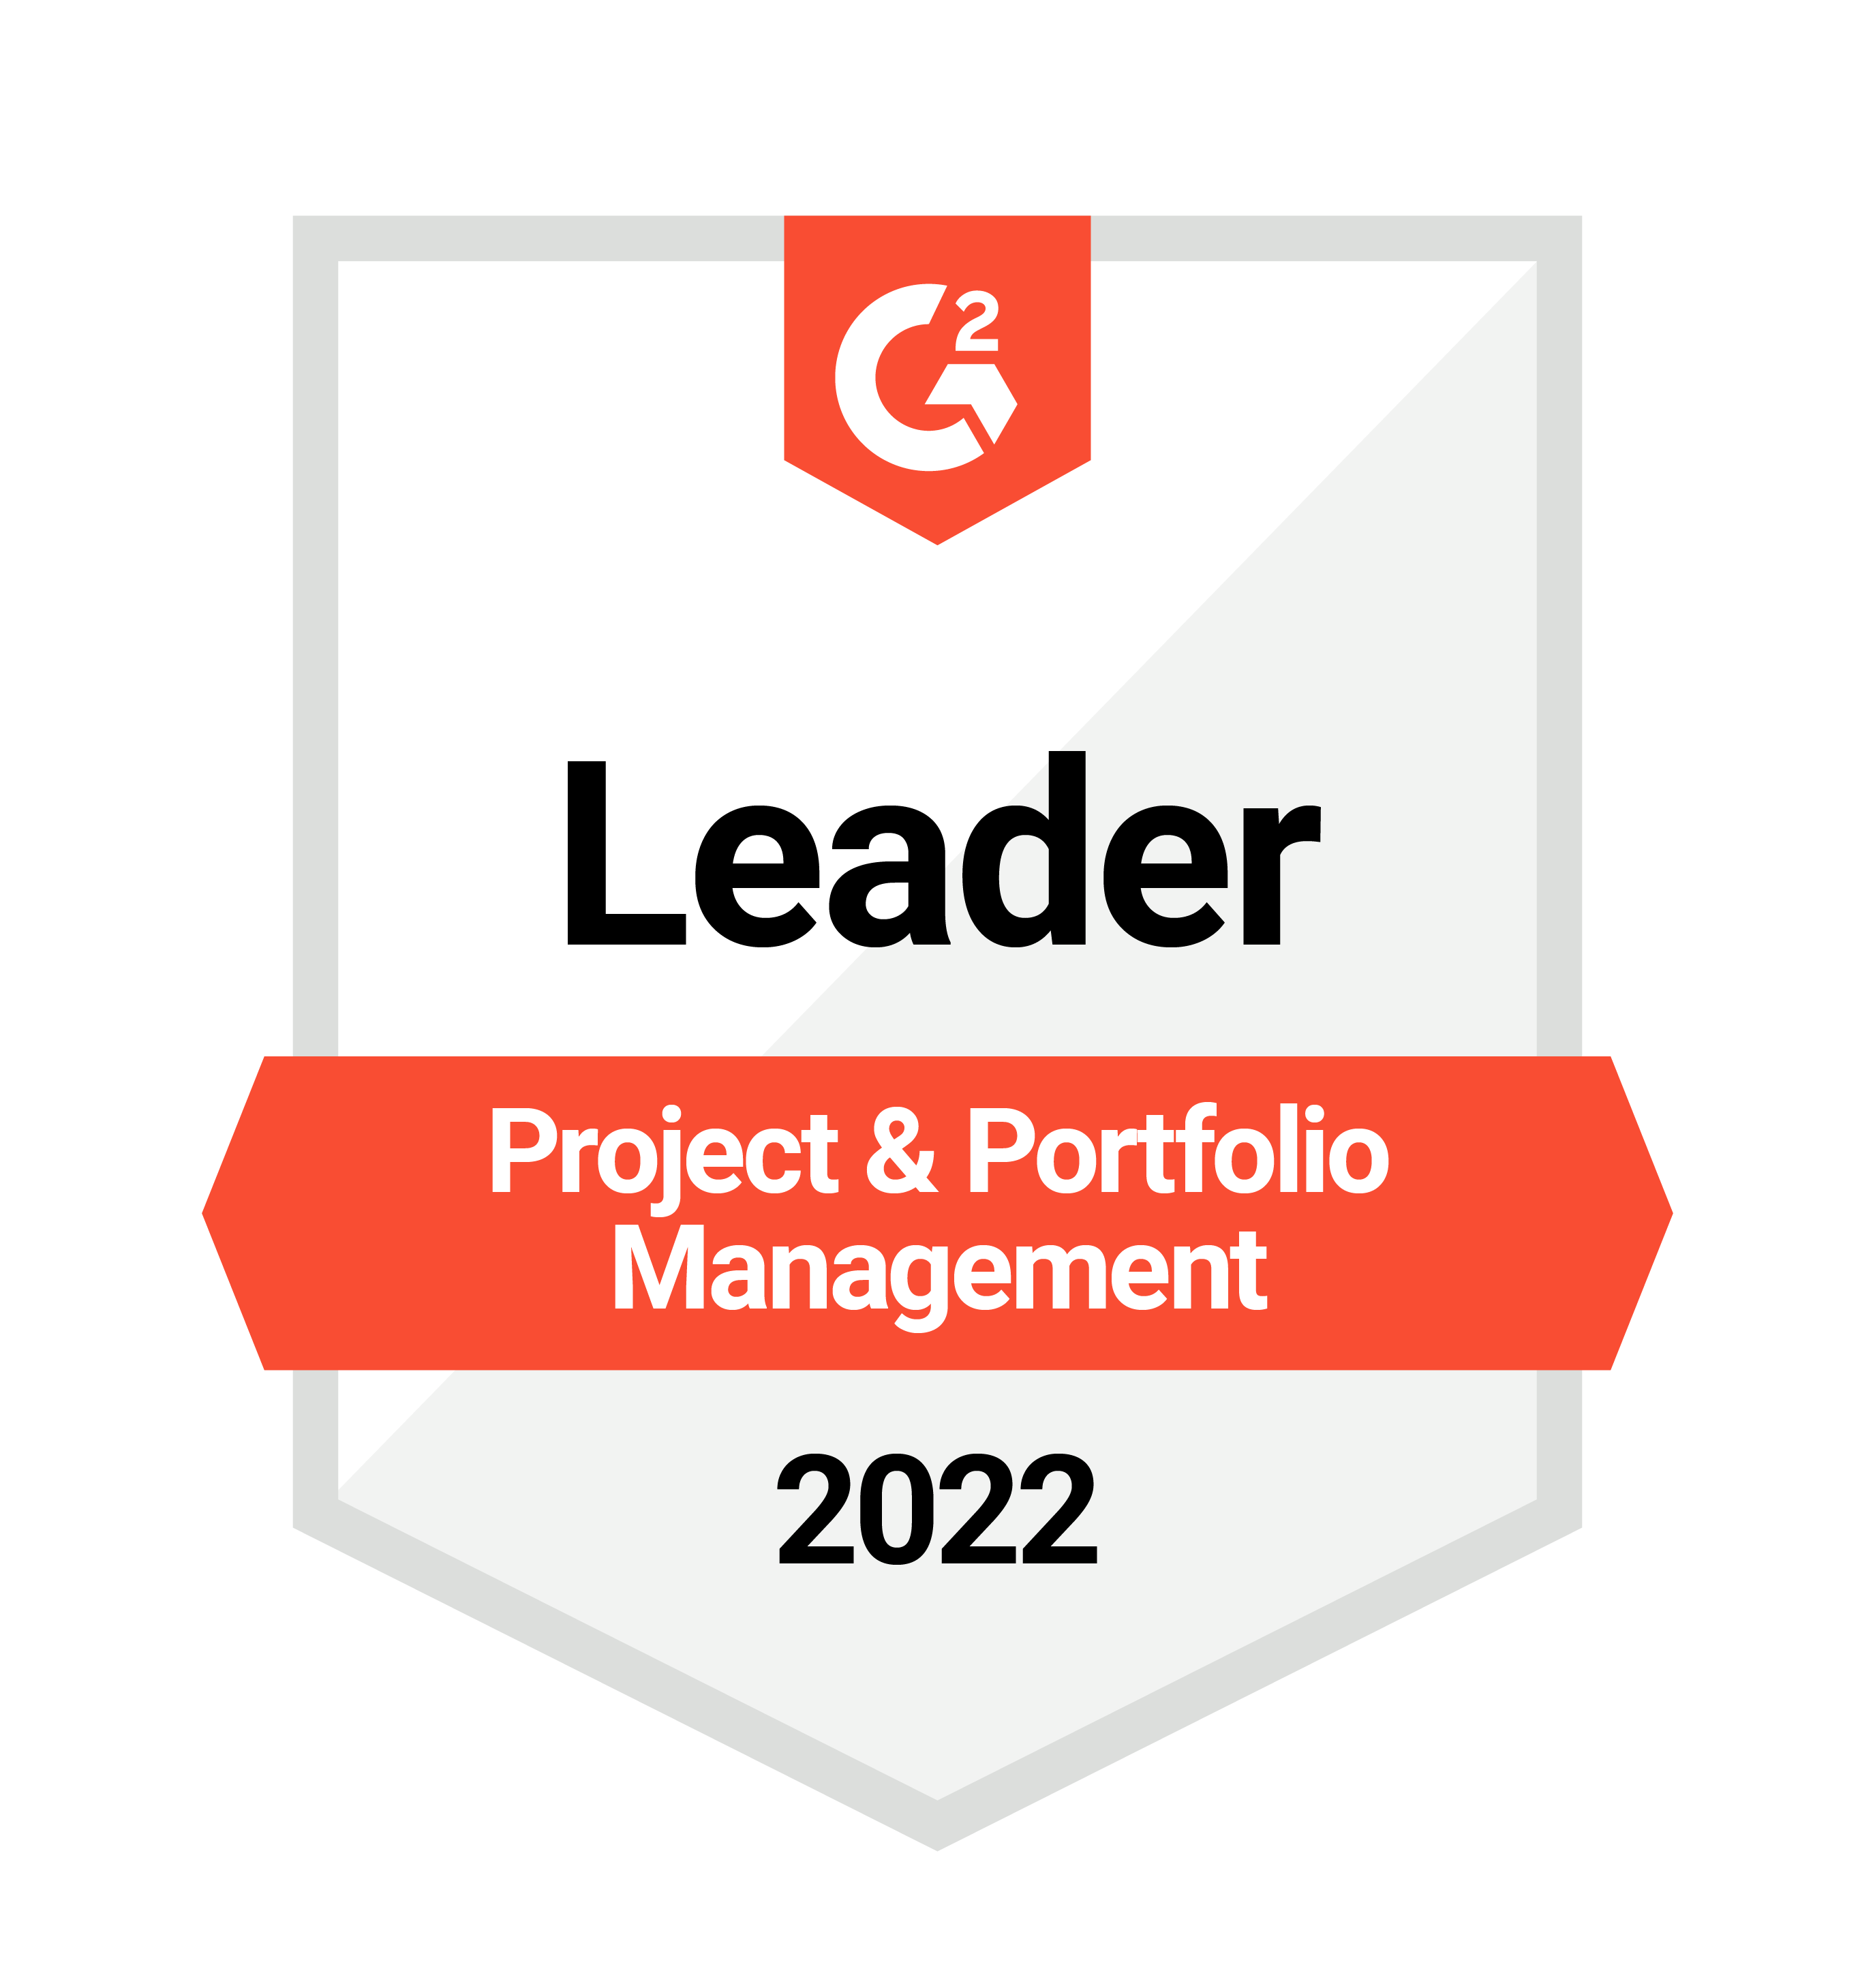 G2 Leader in Project & Portfolio Management